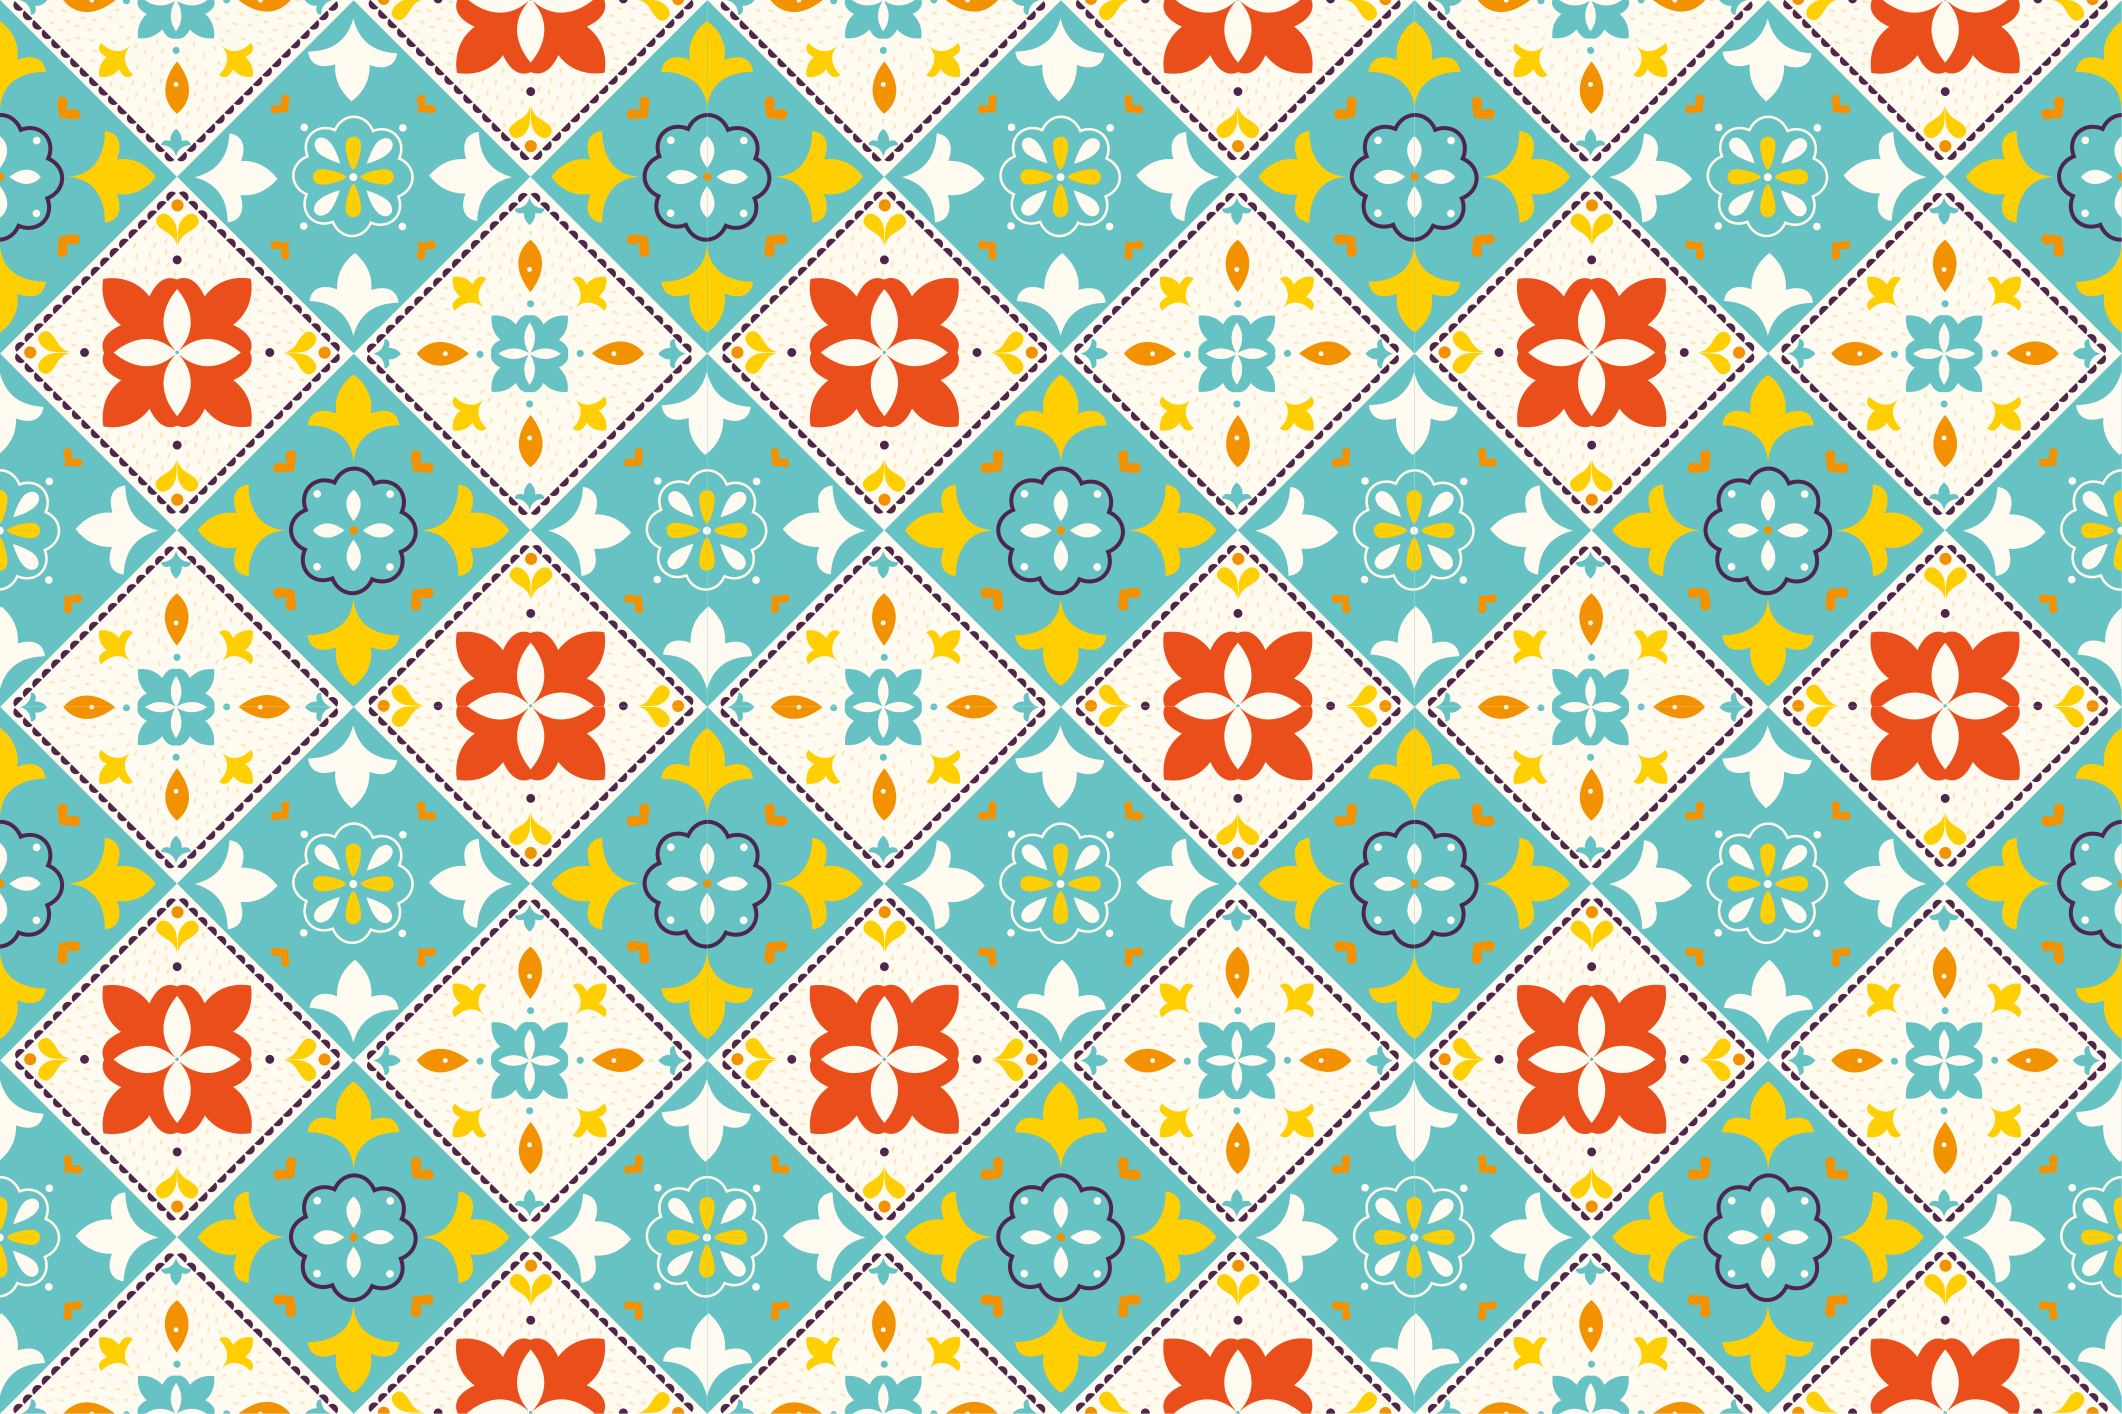 vinyl floor tile patterns